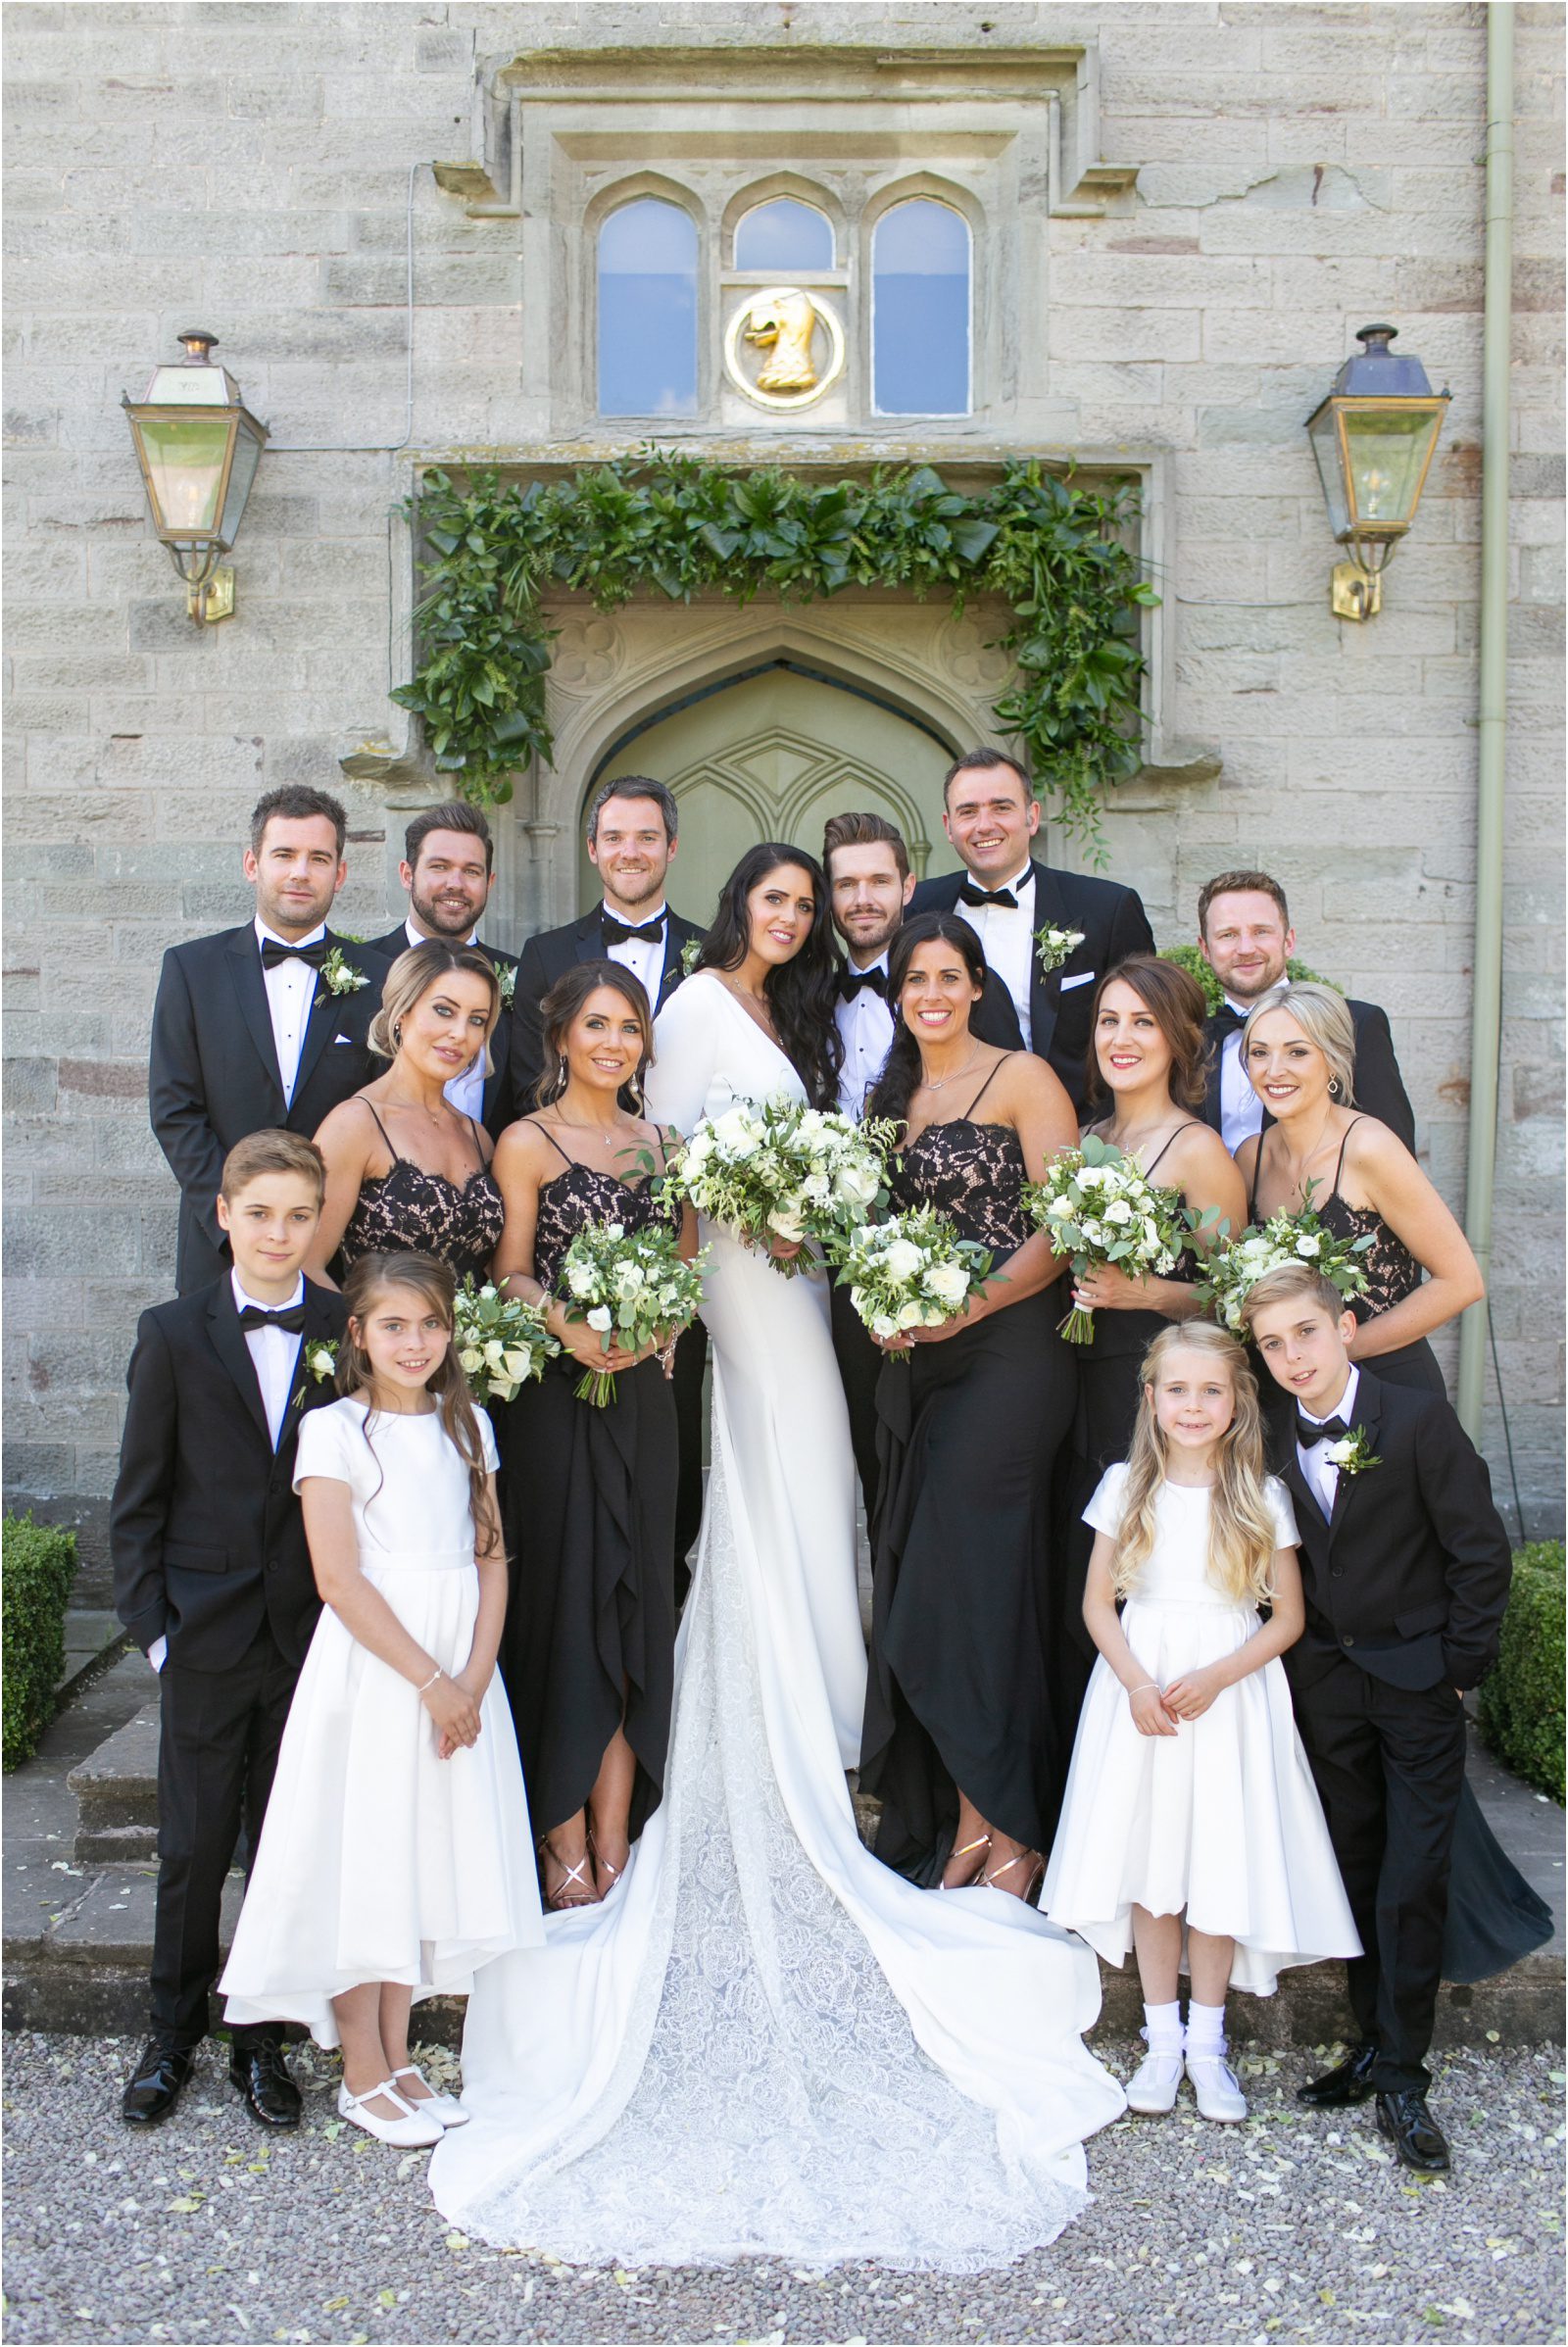 Bridesmaids wearing black dresses for a black tie wedding